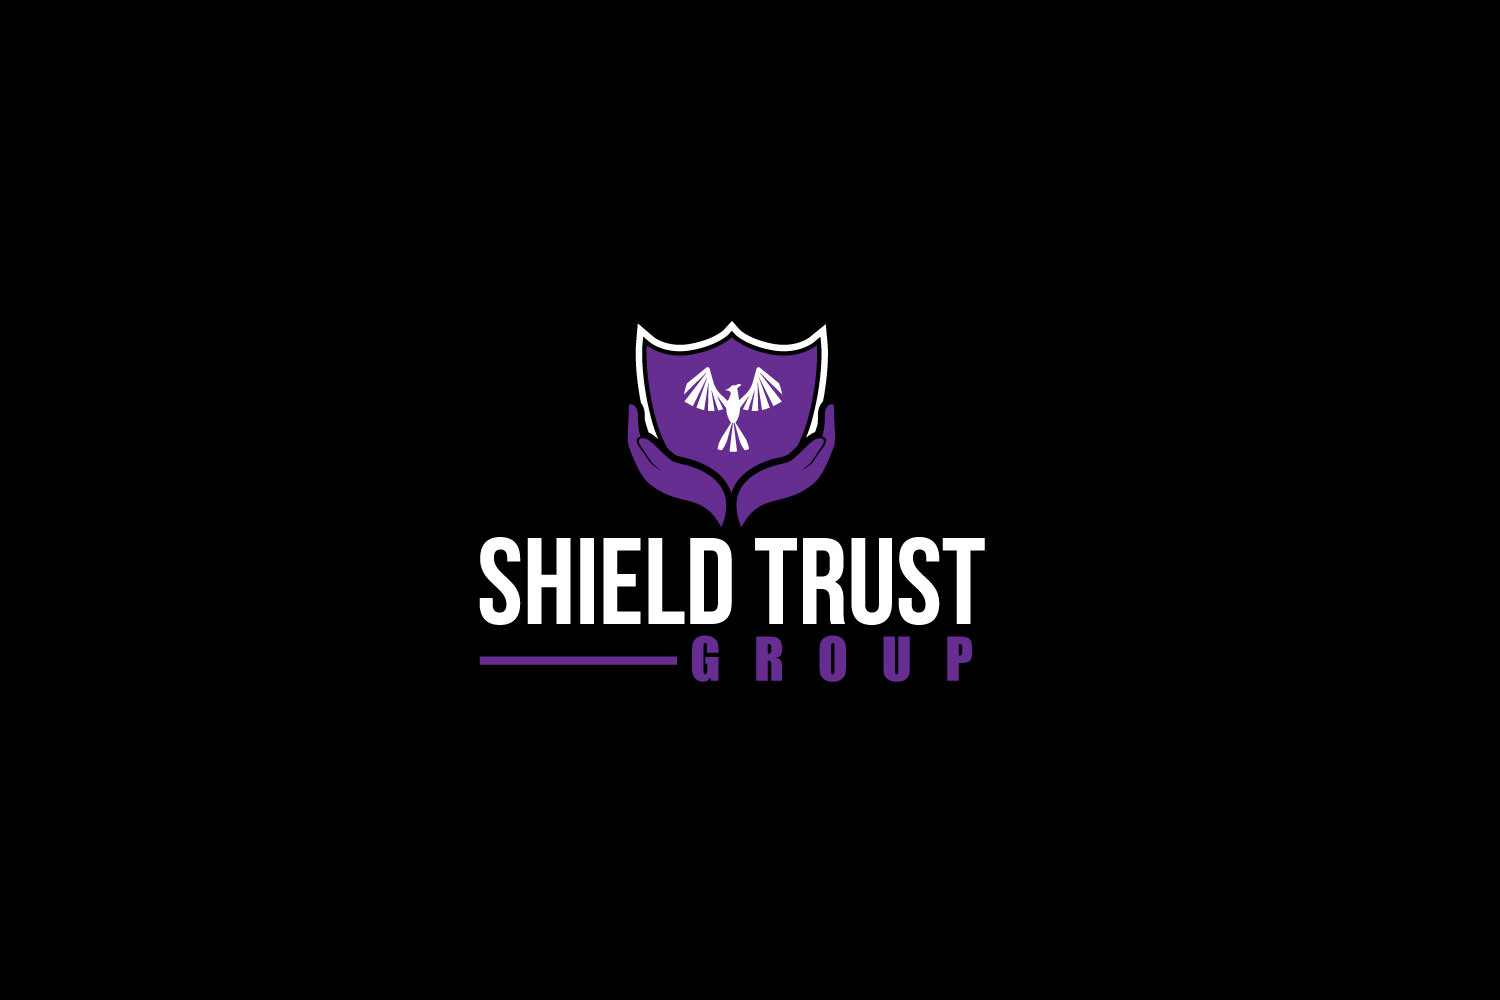 Shield Trust Group logo